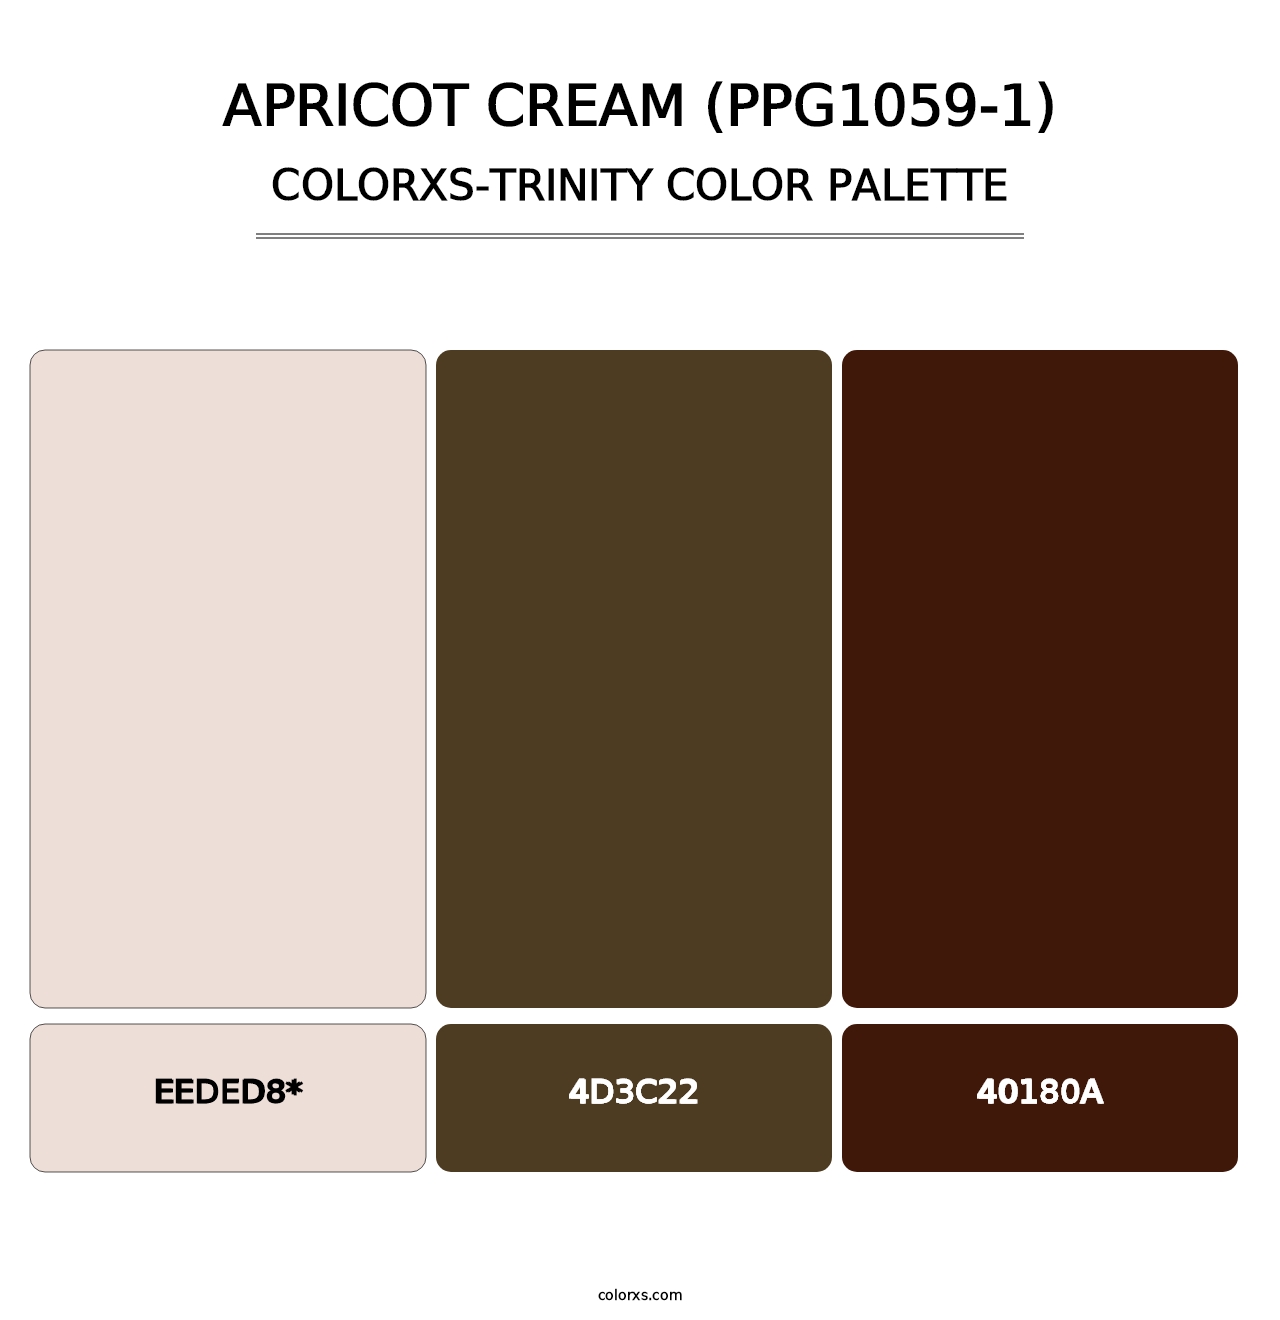 Apricot Cream (PPG1059-1) - Colorxs Trinity Palette